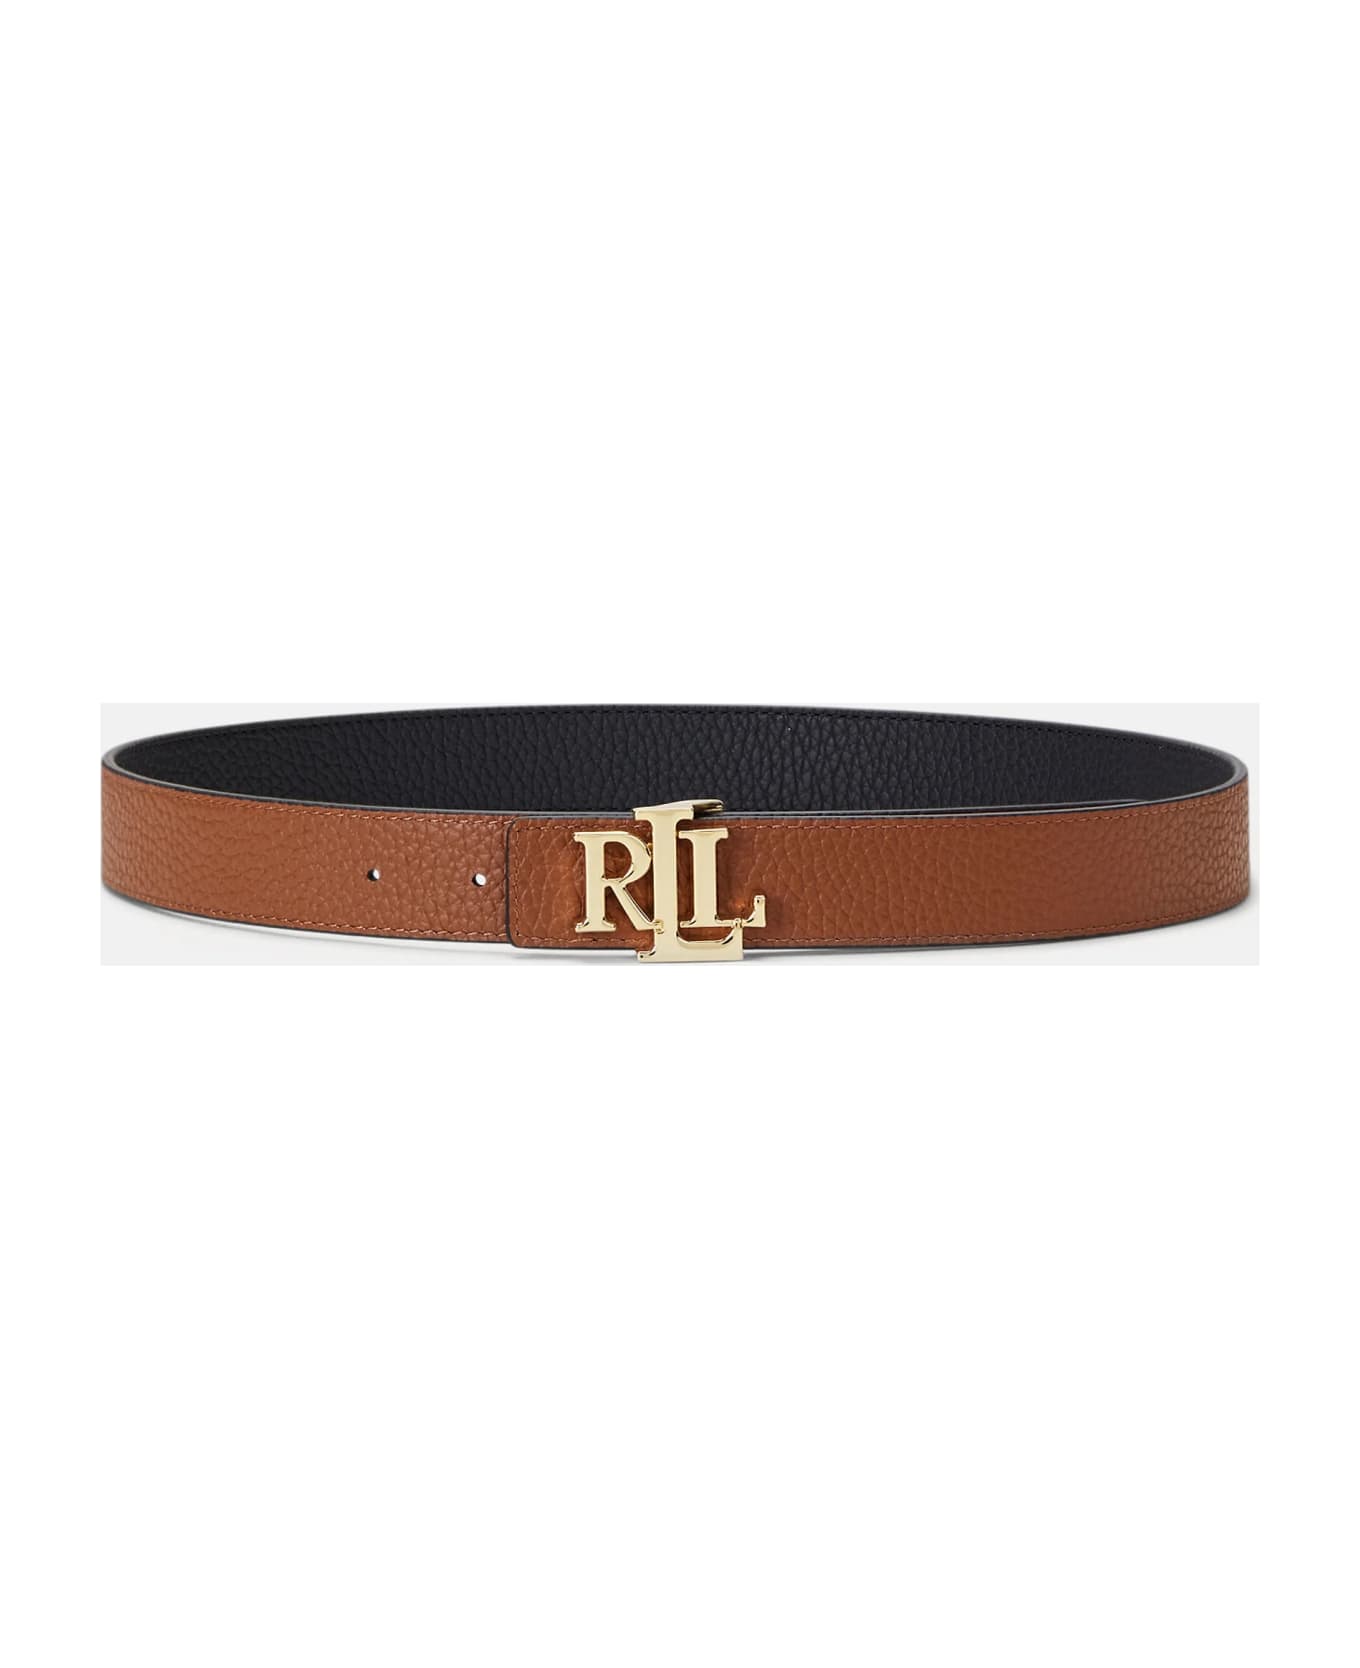 Ralph Lauren Rev Lrl 20 Belt Skinny - Black Lauren Tan ベルト